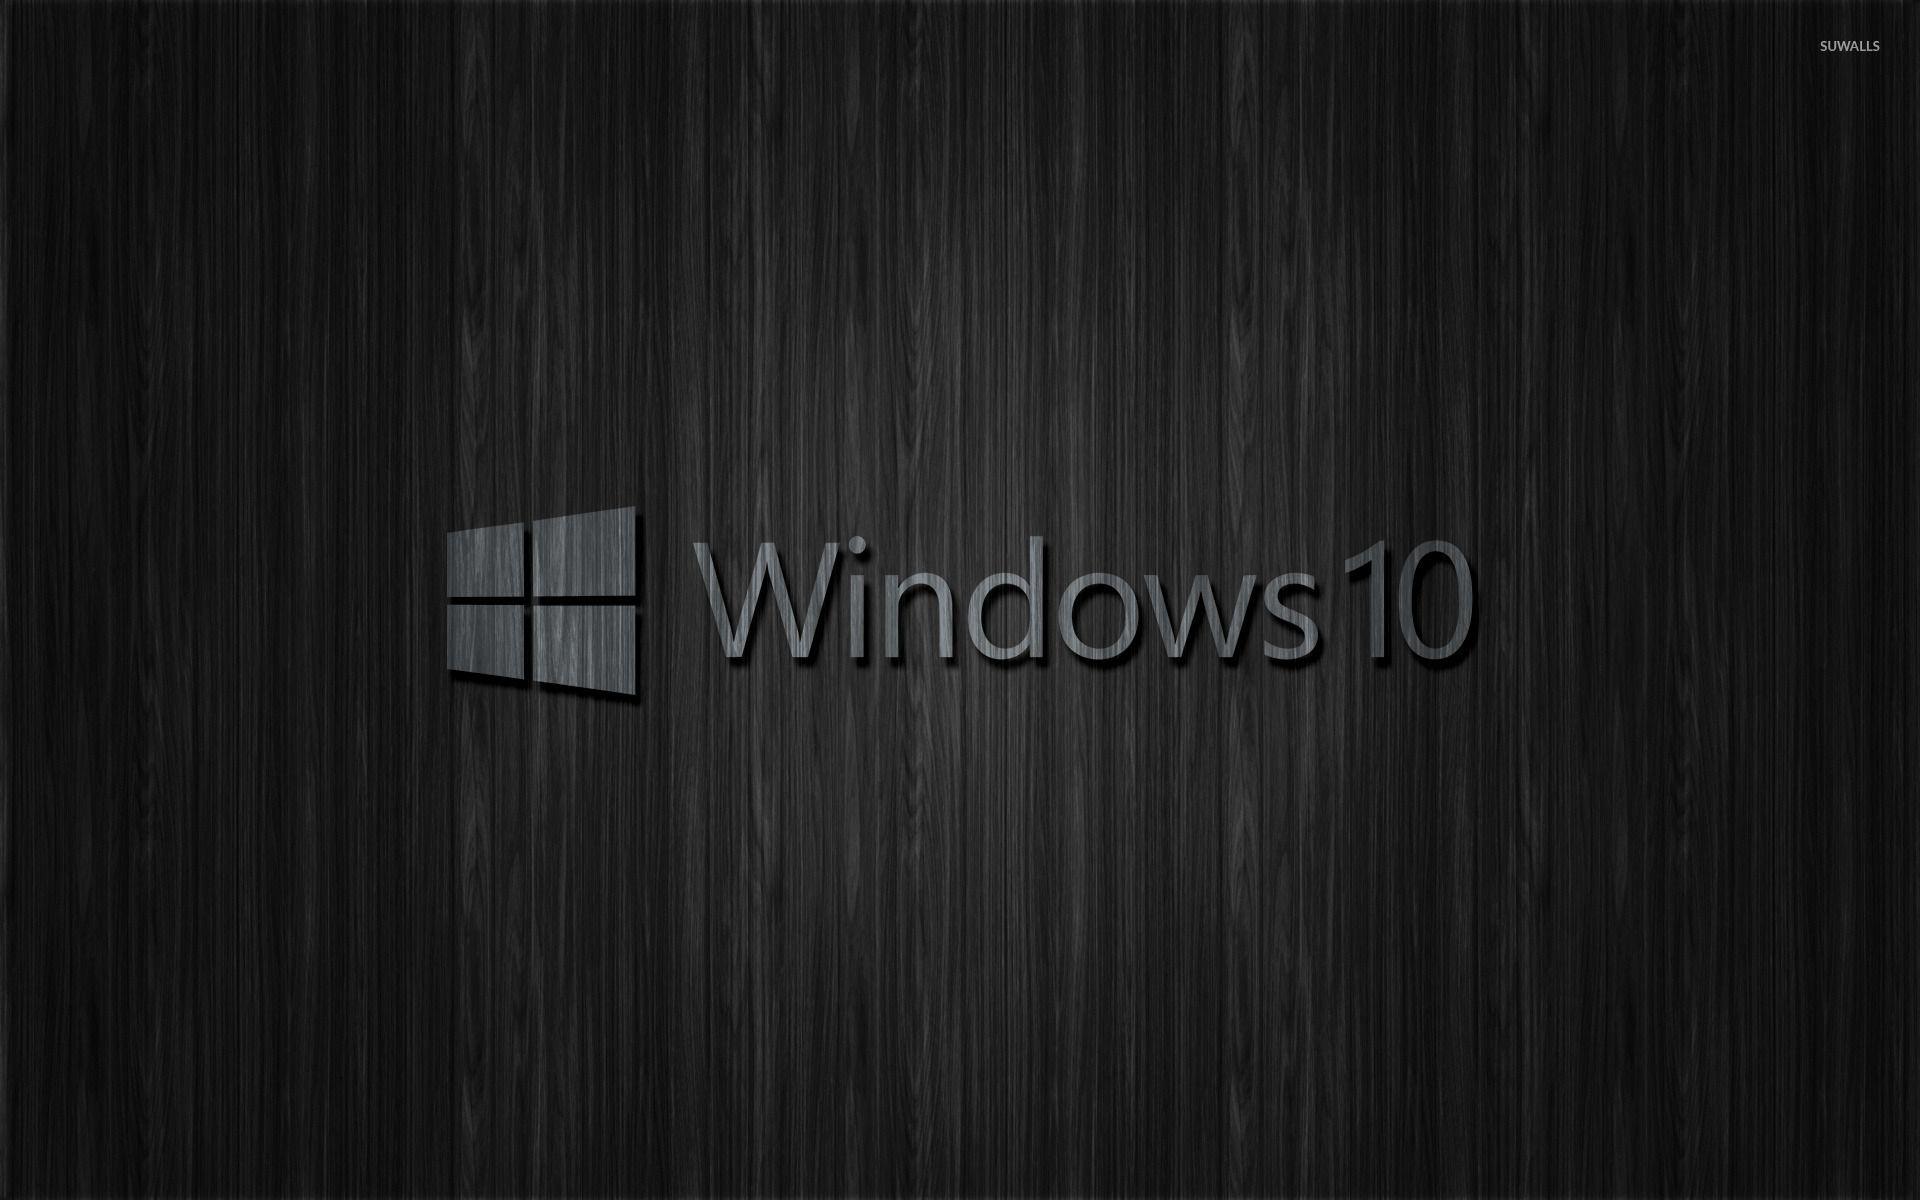 Black Windows Logo - Sun Wood Windows Logo Wallpapers and Background Images - stmed.net